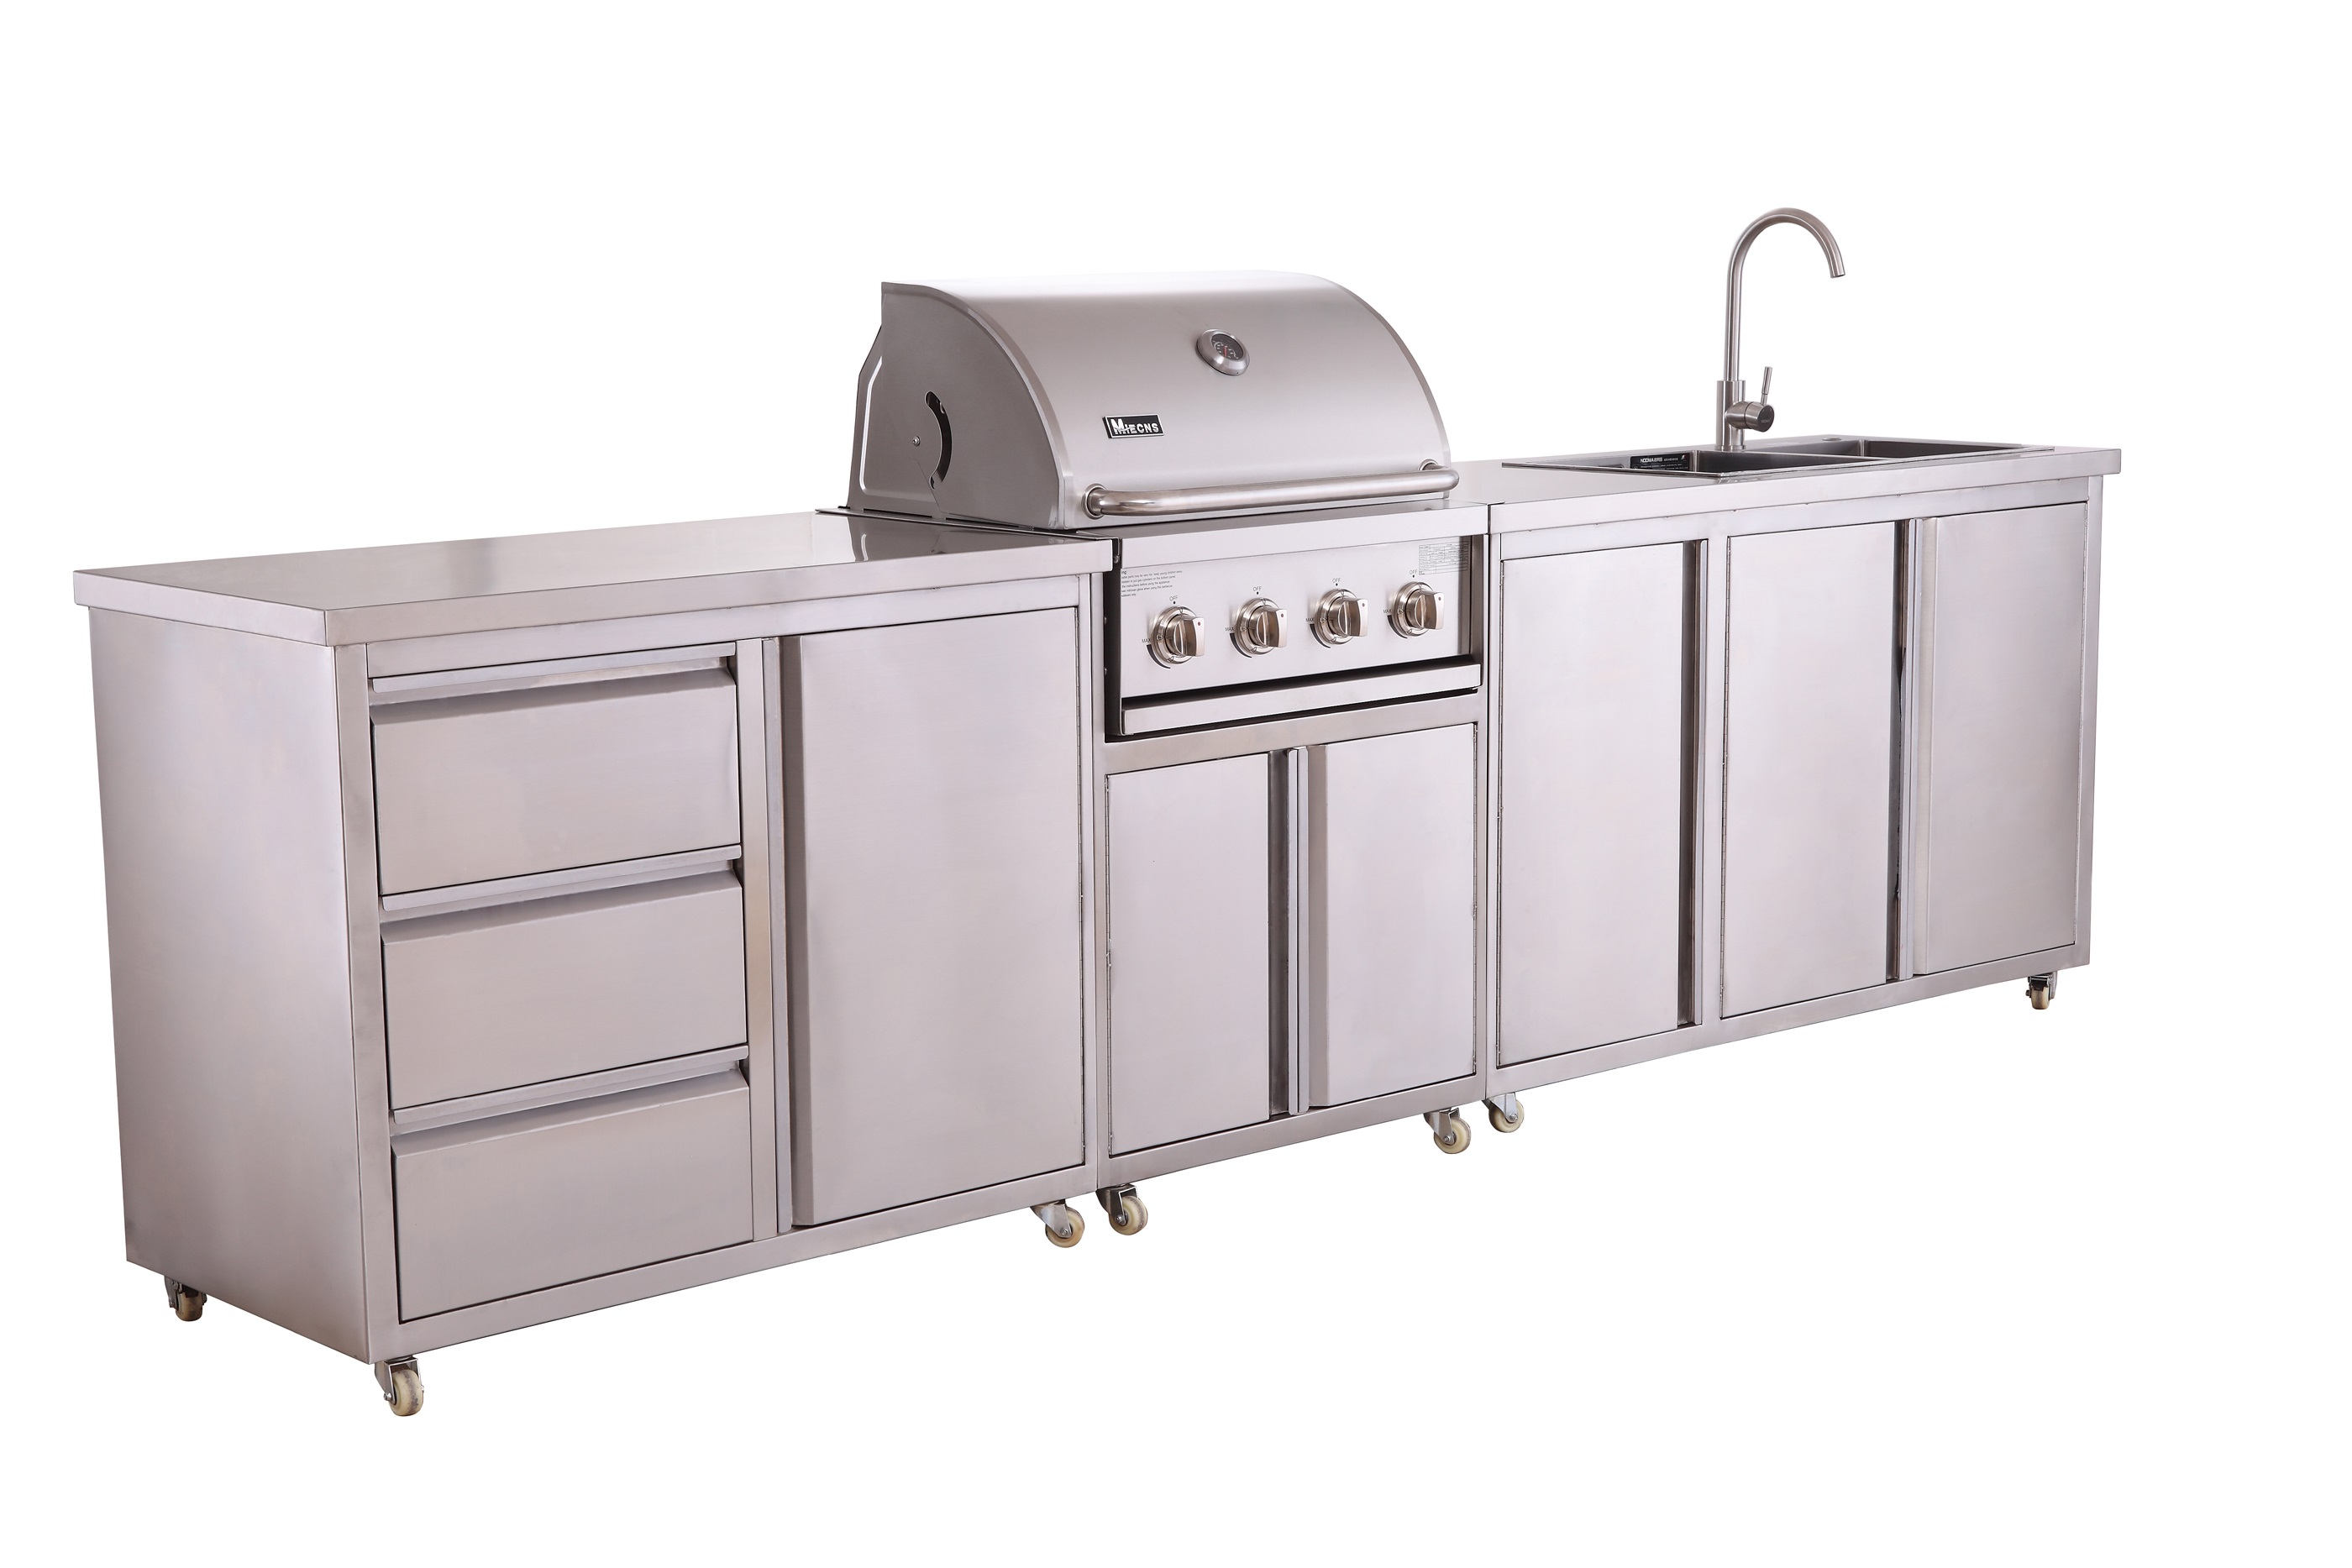 Miecns/美诺仕烧烤厨房不锈钢组合柜 304不锈钢 户外不锈钢烧烤炉